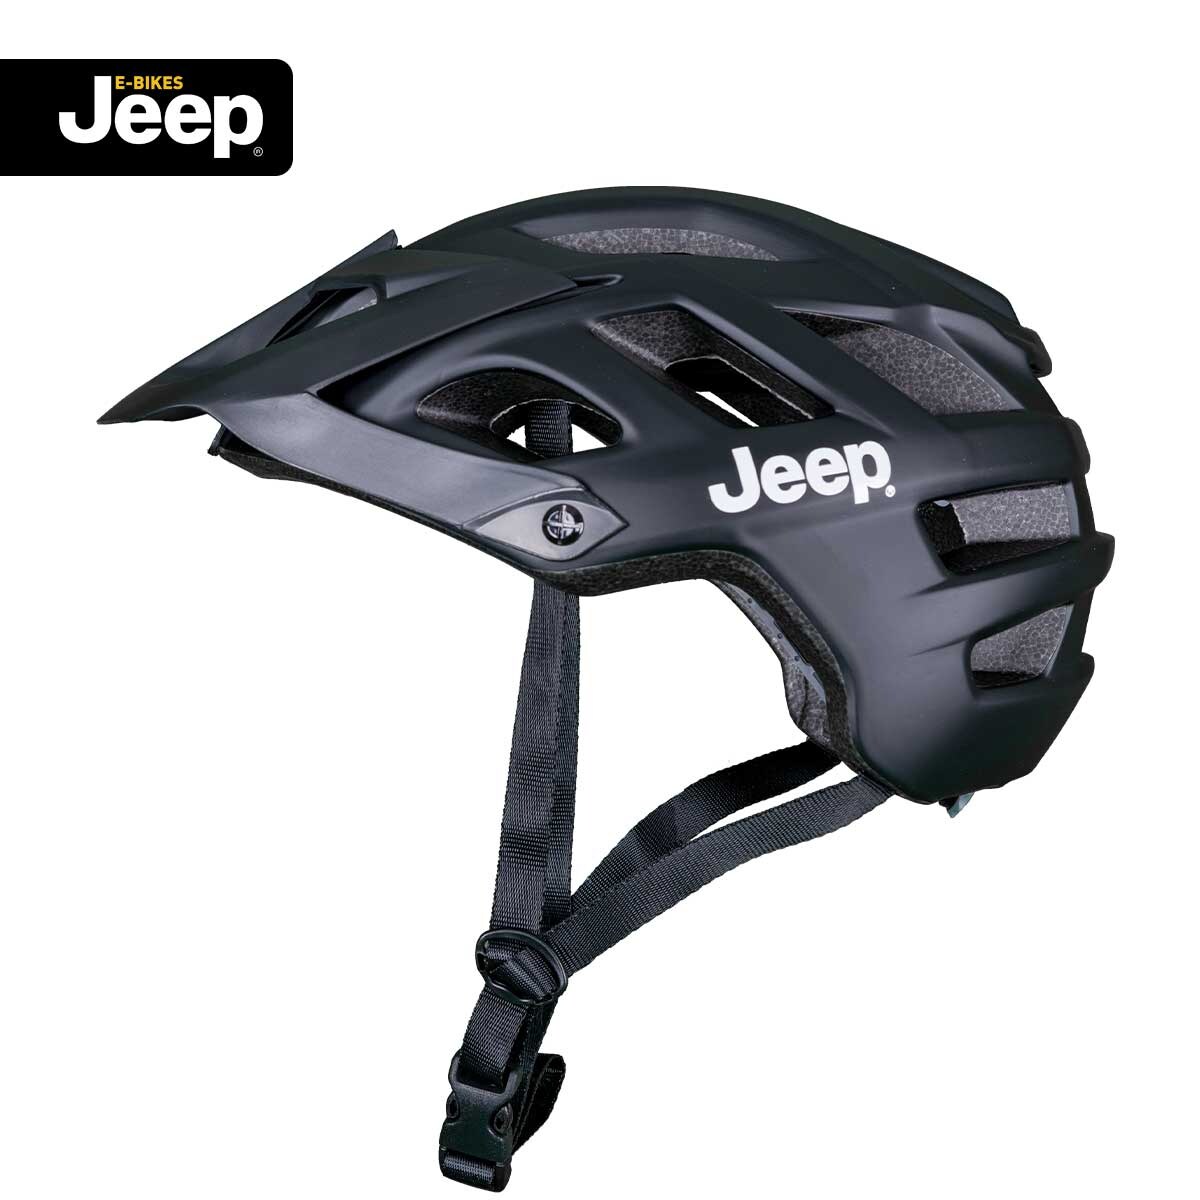 Jeep E-Bikes Helm Pro black M